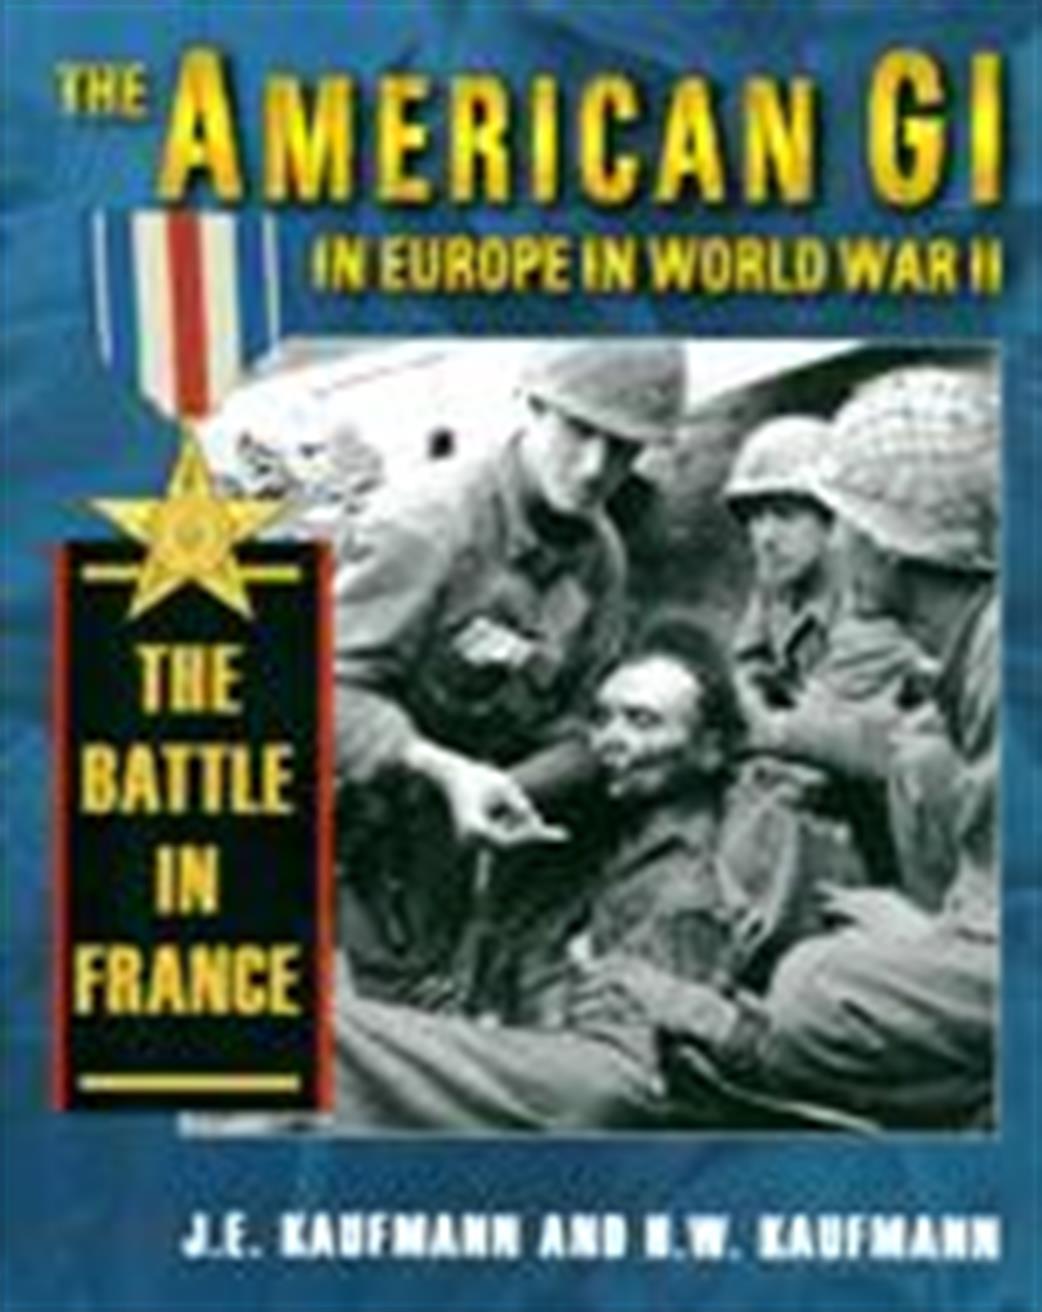 1/10 9780811705264 The Battle in France - The American GI In Europe In World War II by J & H Kaufmann